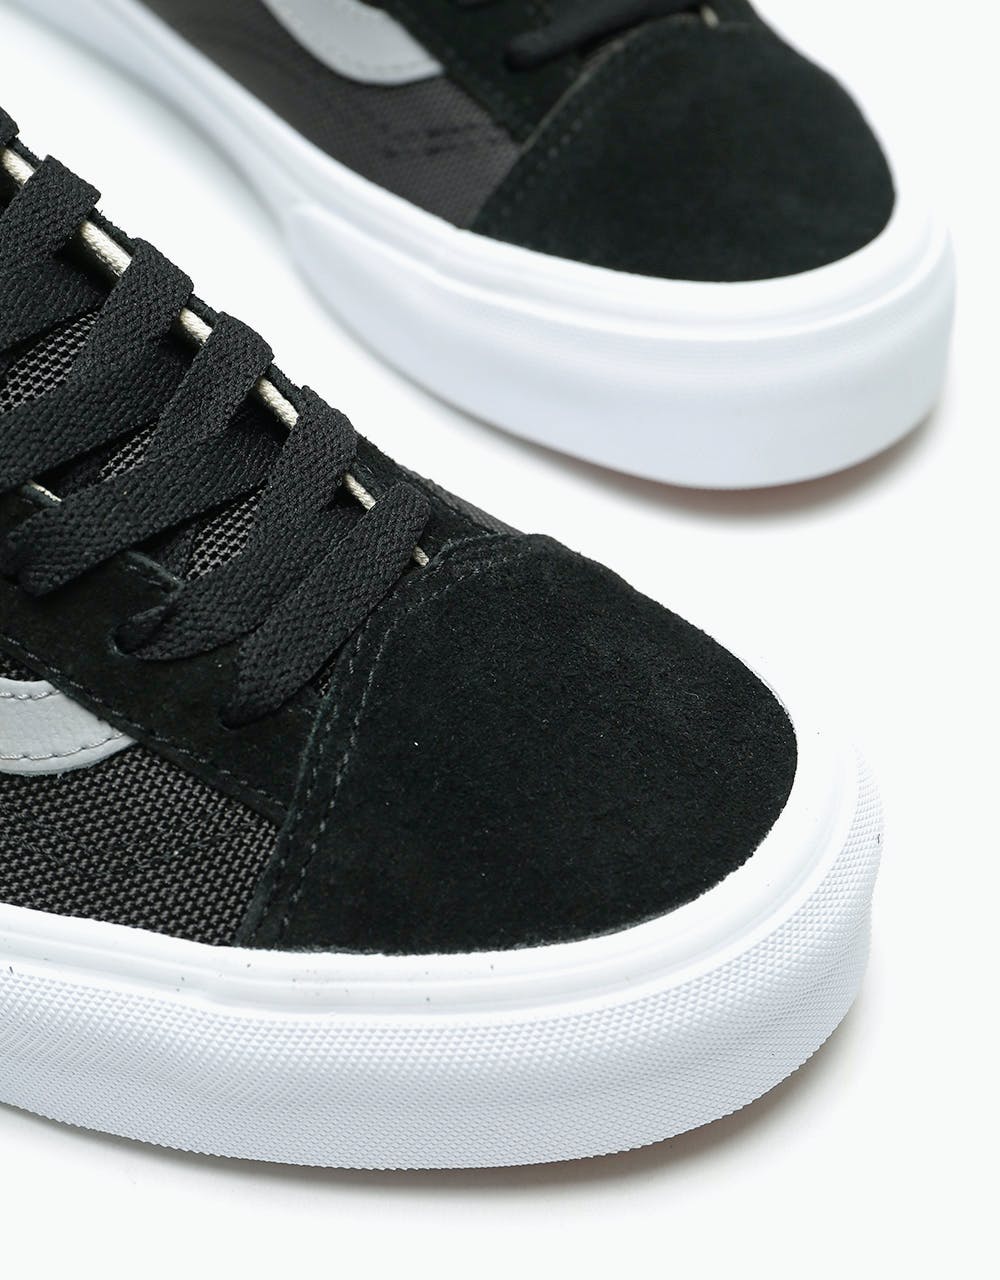 Vans Style 36 Skate Shoes - (Ballistic) Black/Alloy/True White